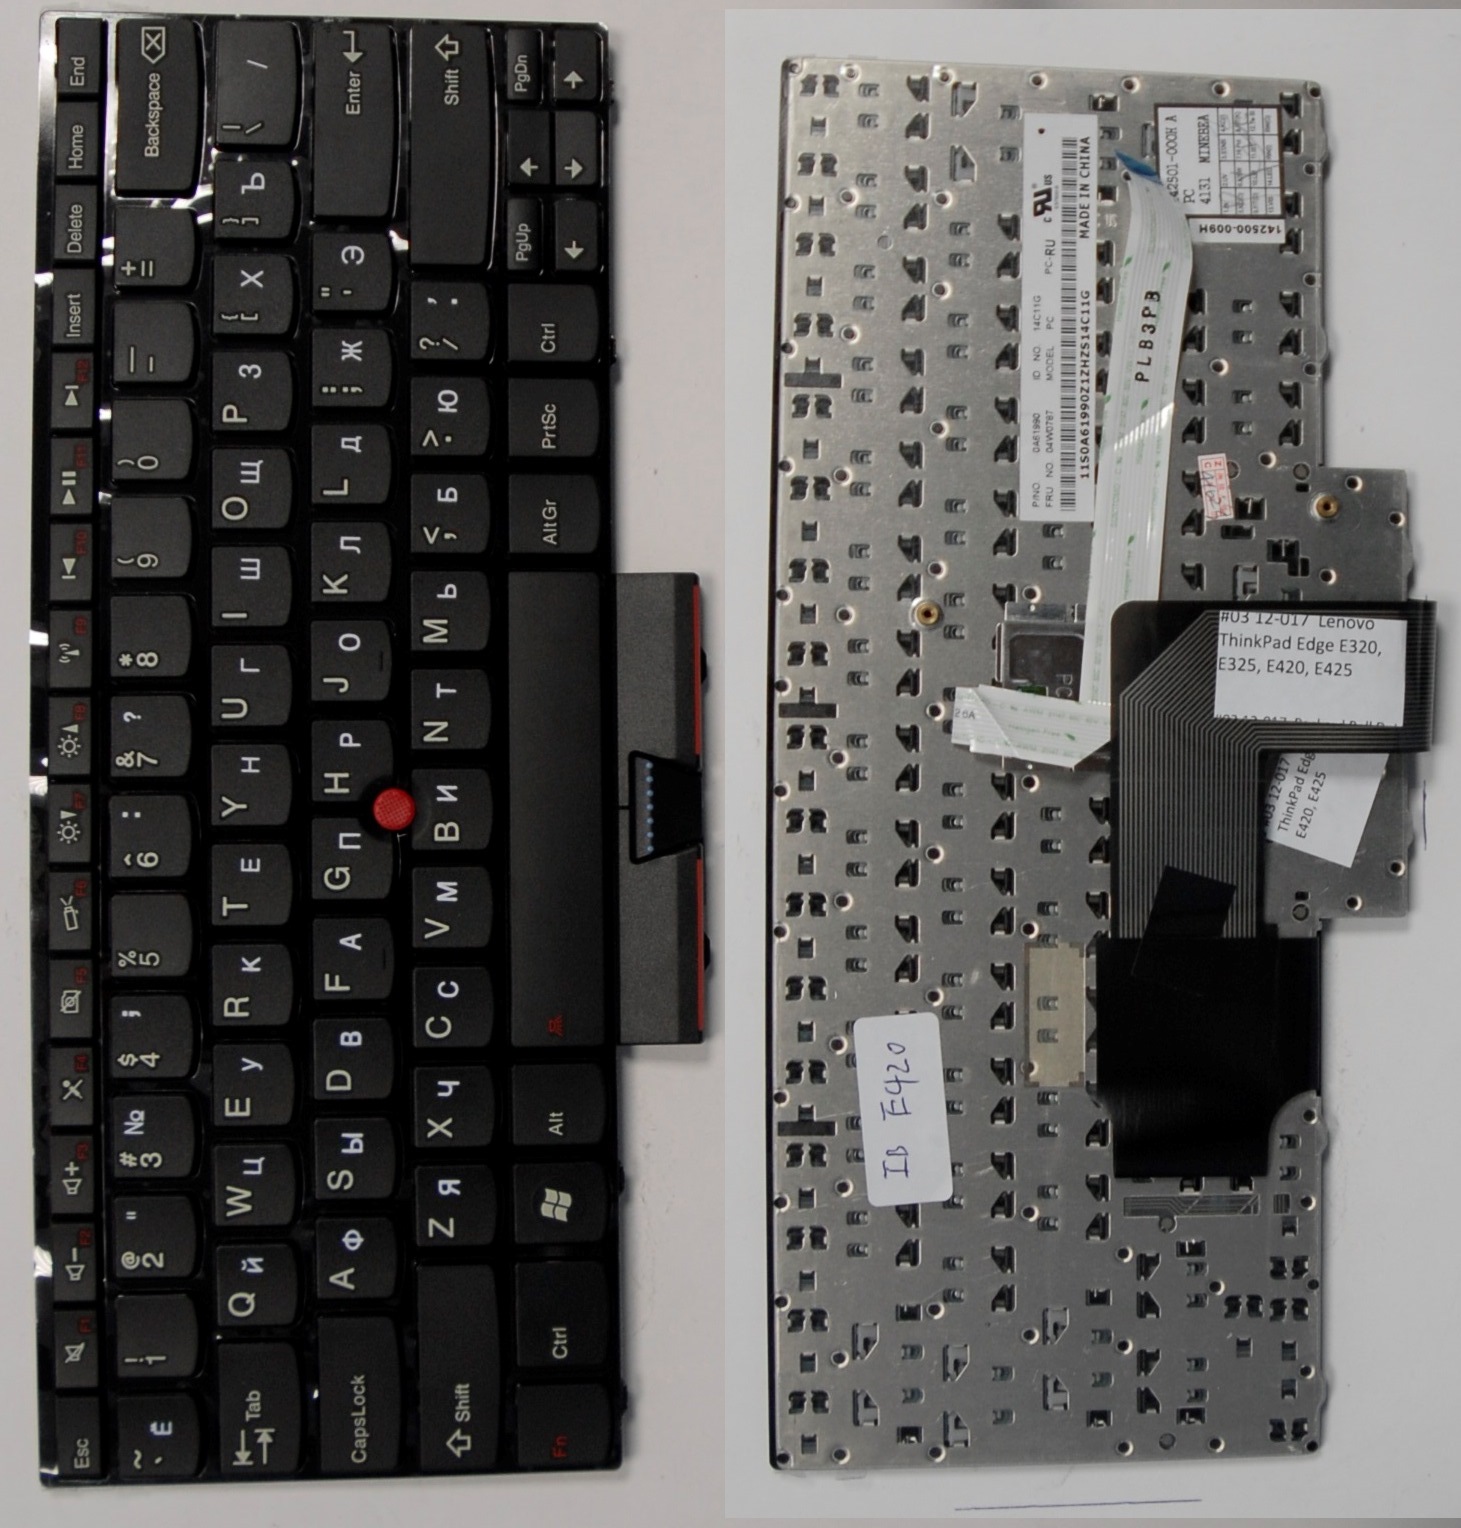    Lenovo ThinkPad E320, E325, E420, E425 